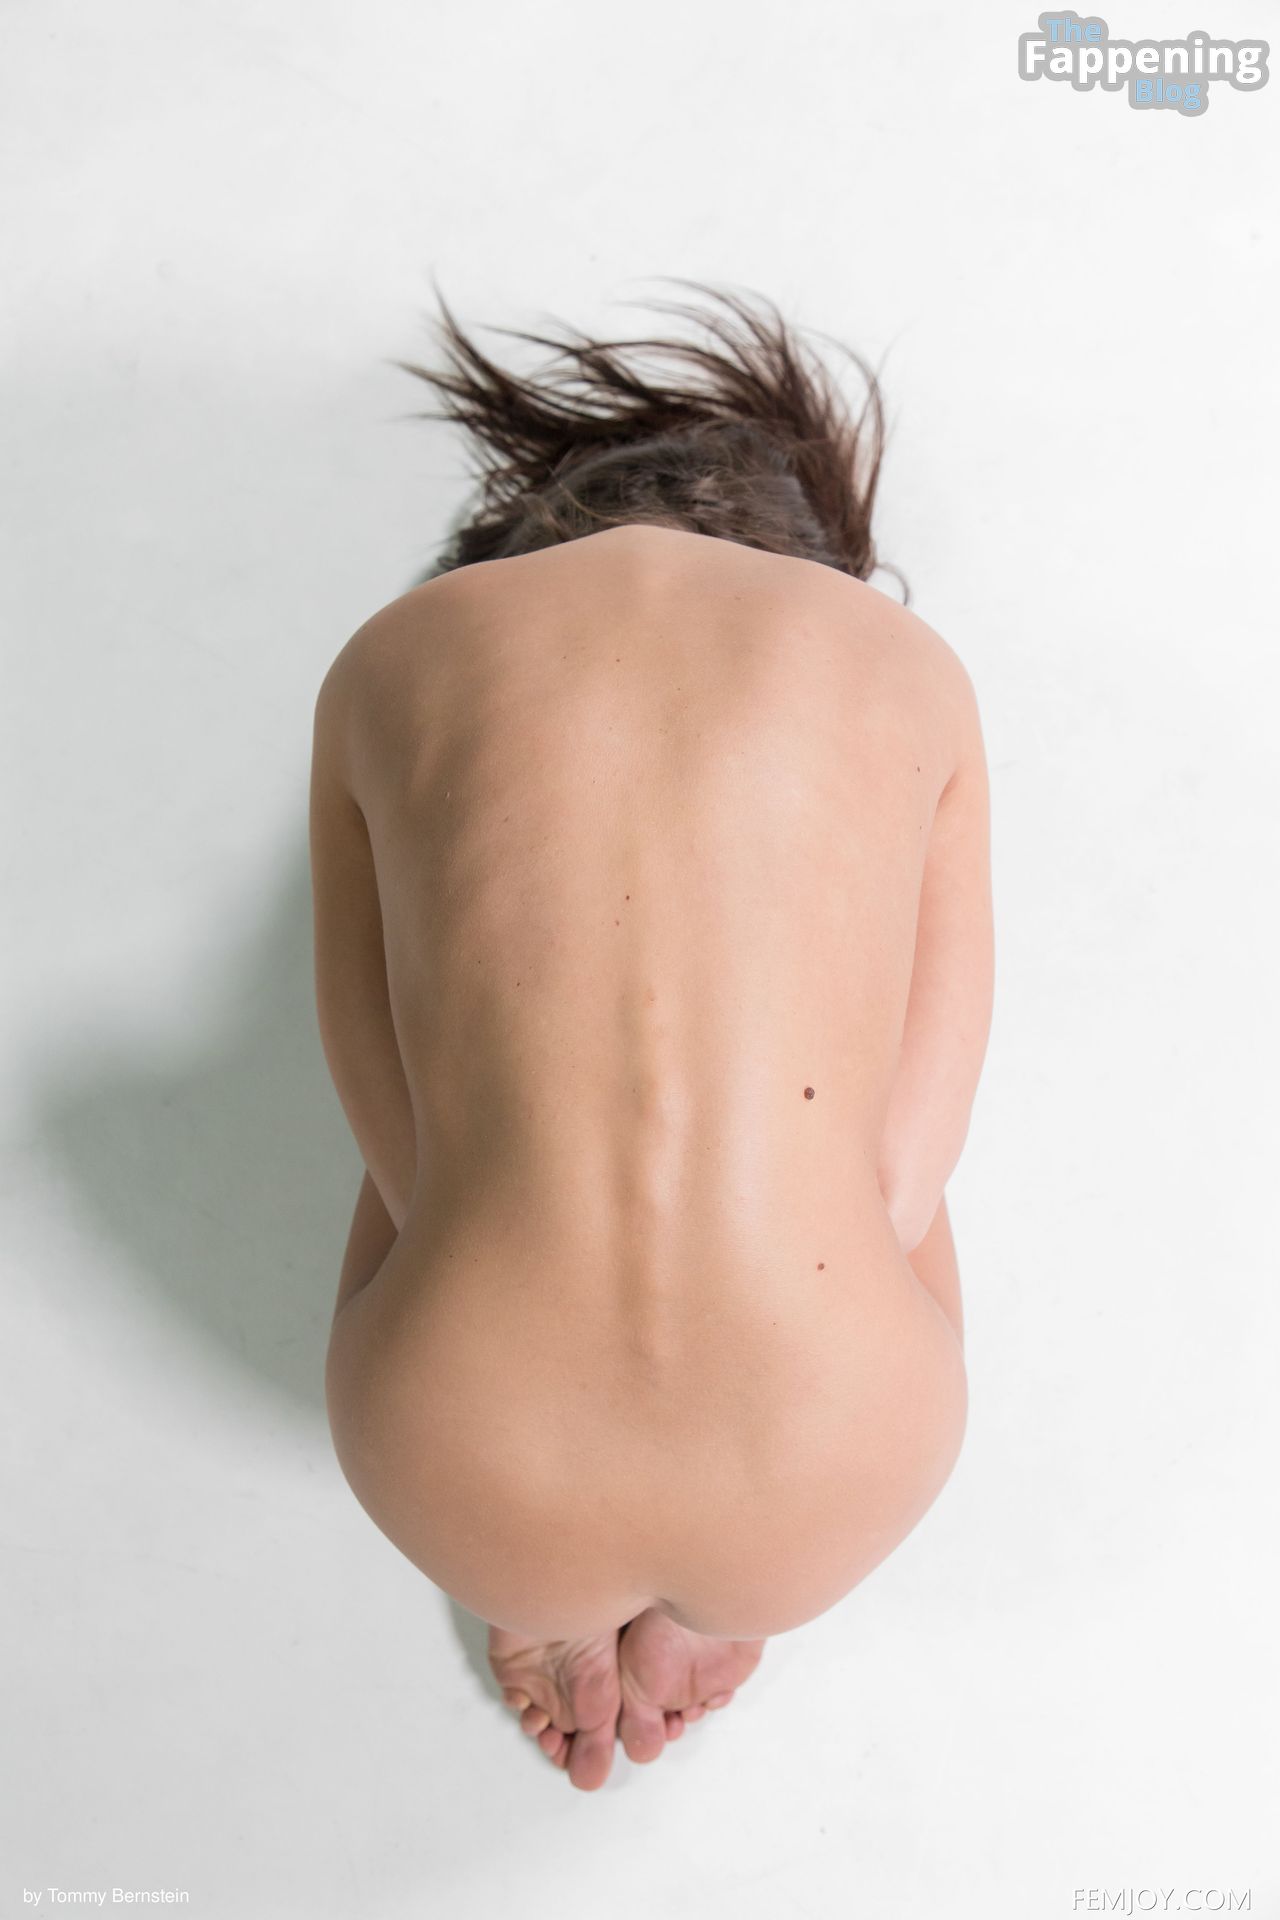 Sabrisse-Nude-Striking-Beauty-33-The-Fappening-Blog.jpg